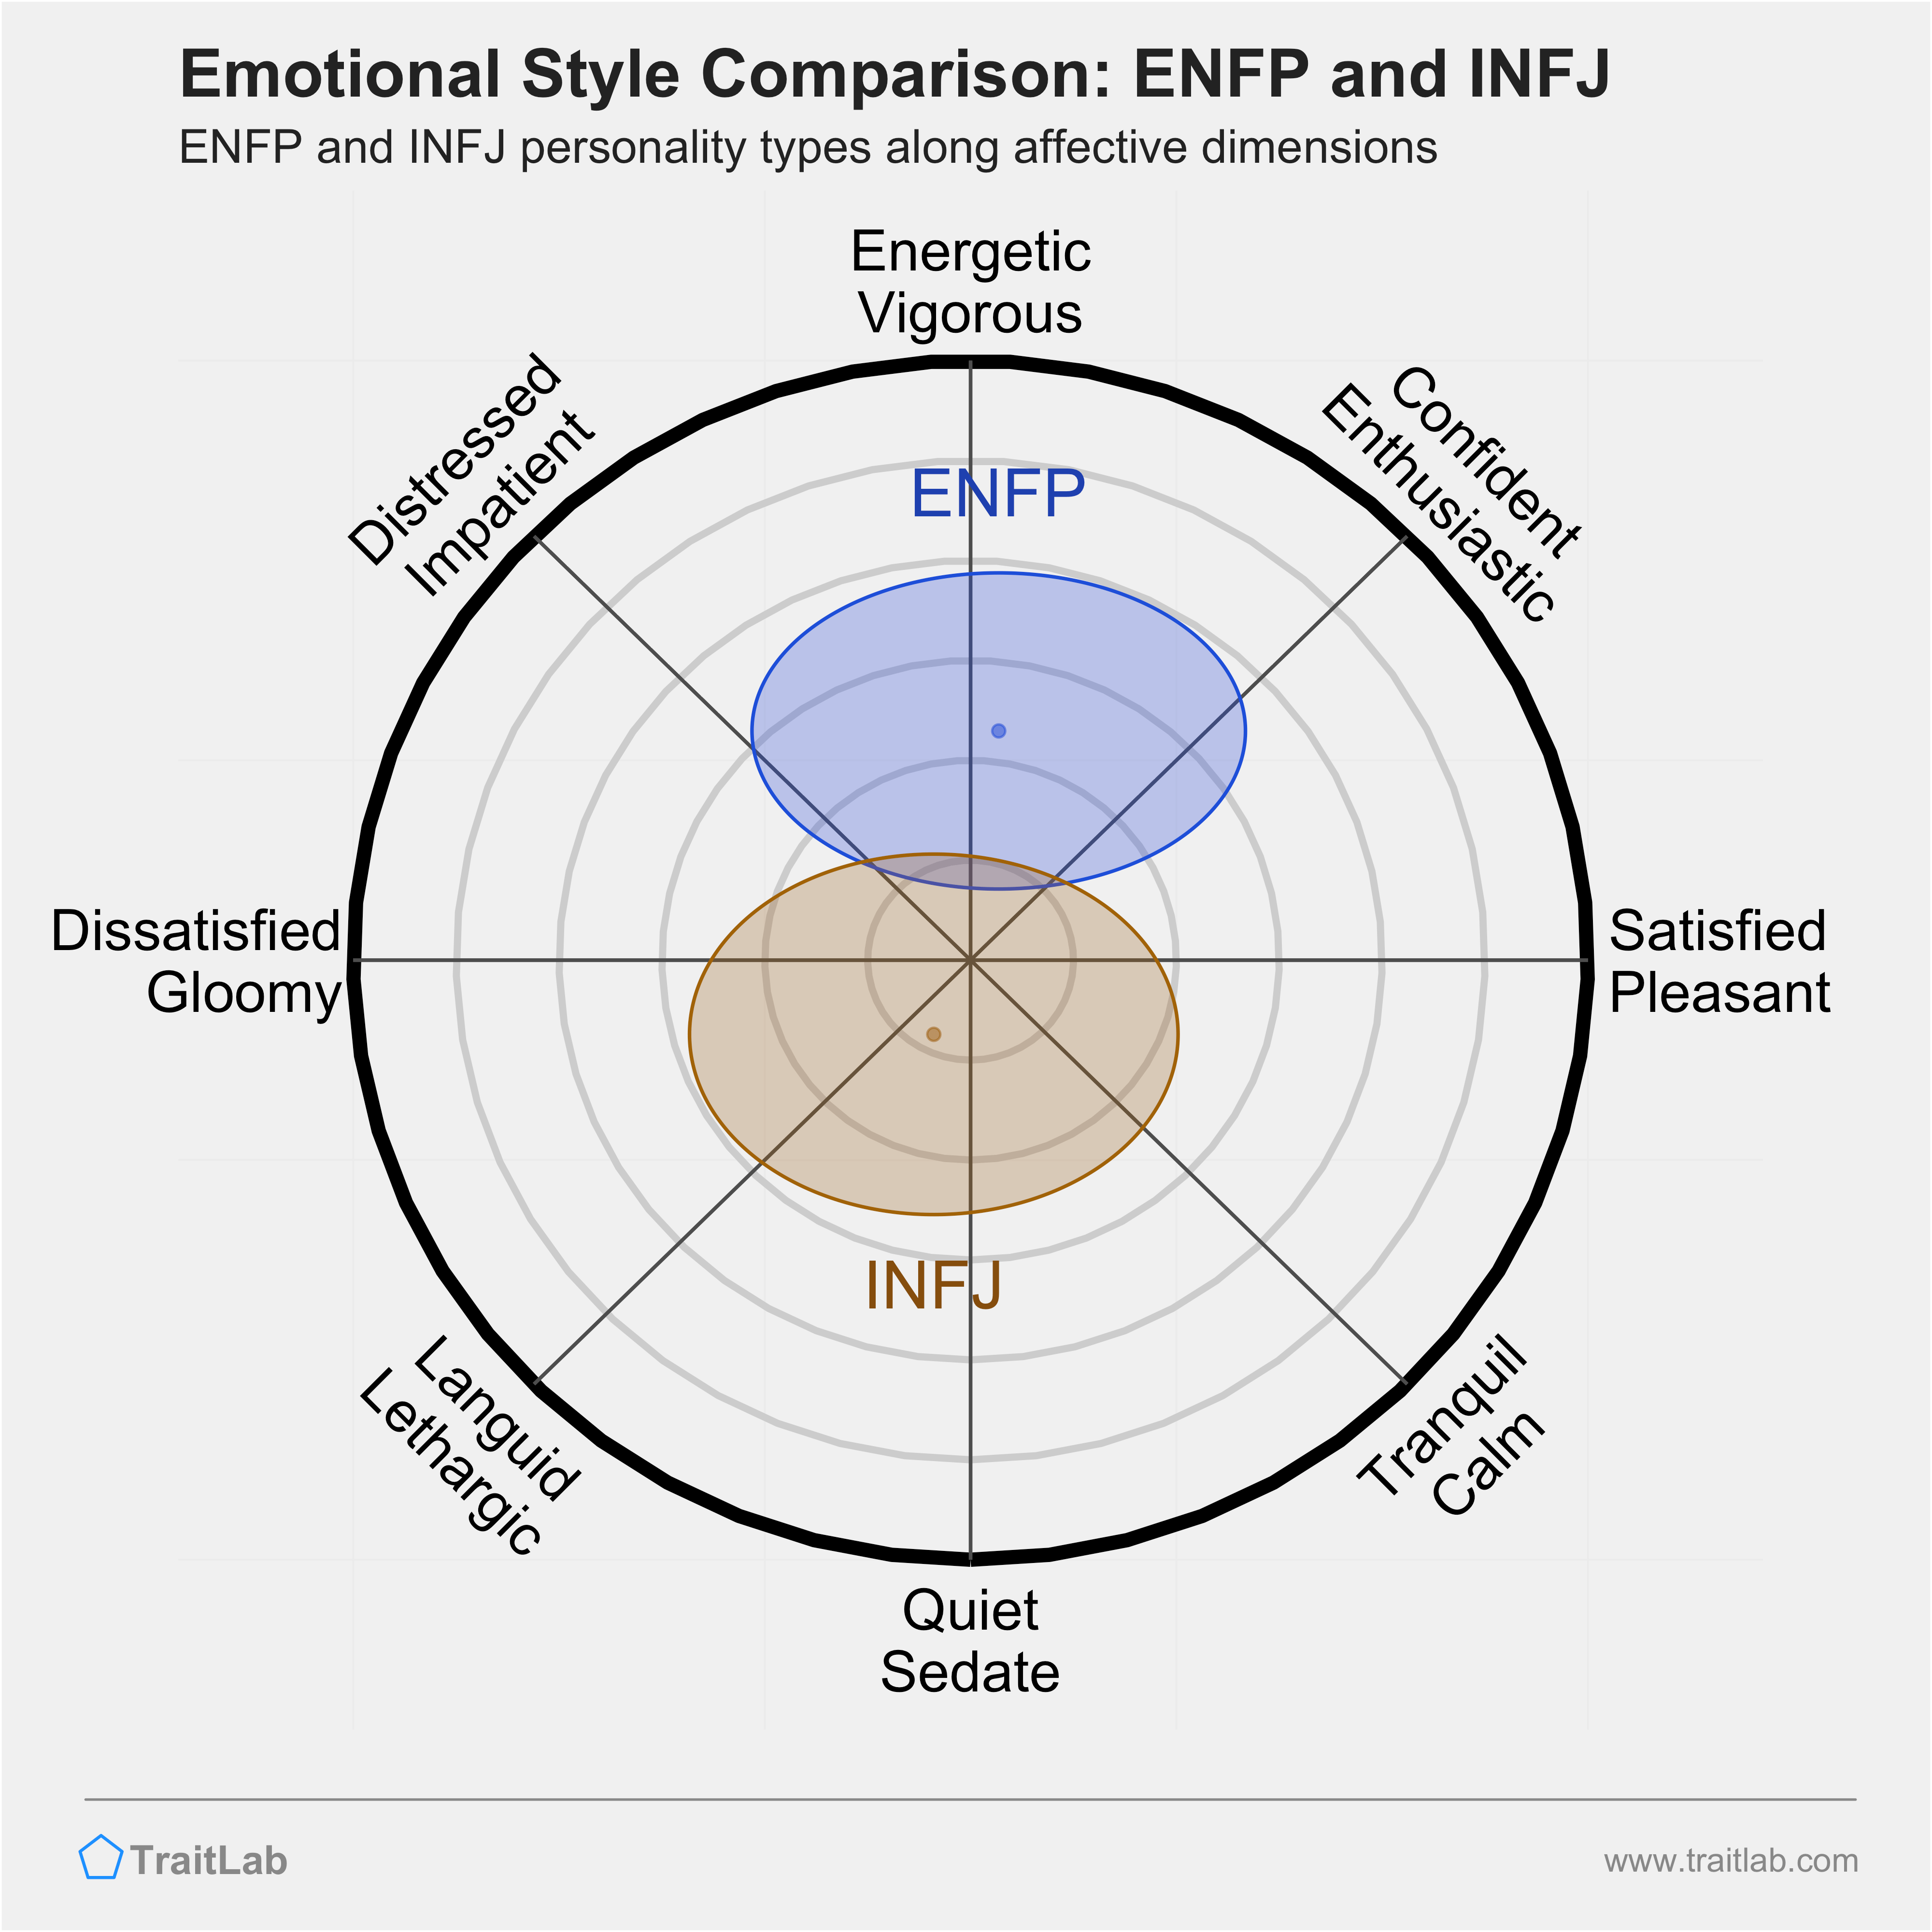 ENFP and INFJ comparison across emotional (affective) dimensions